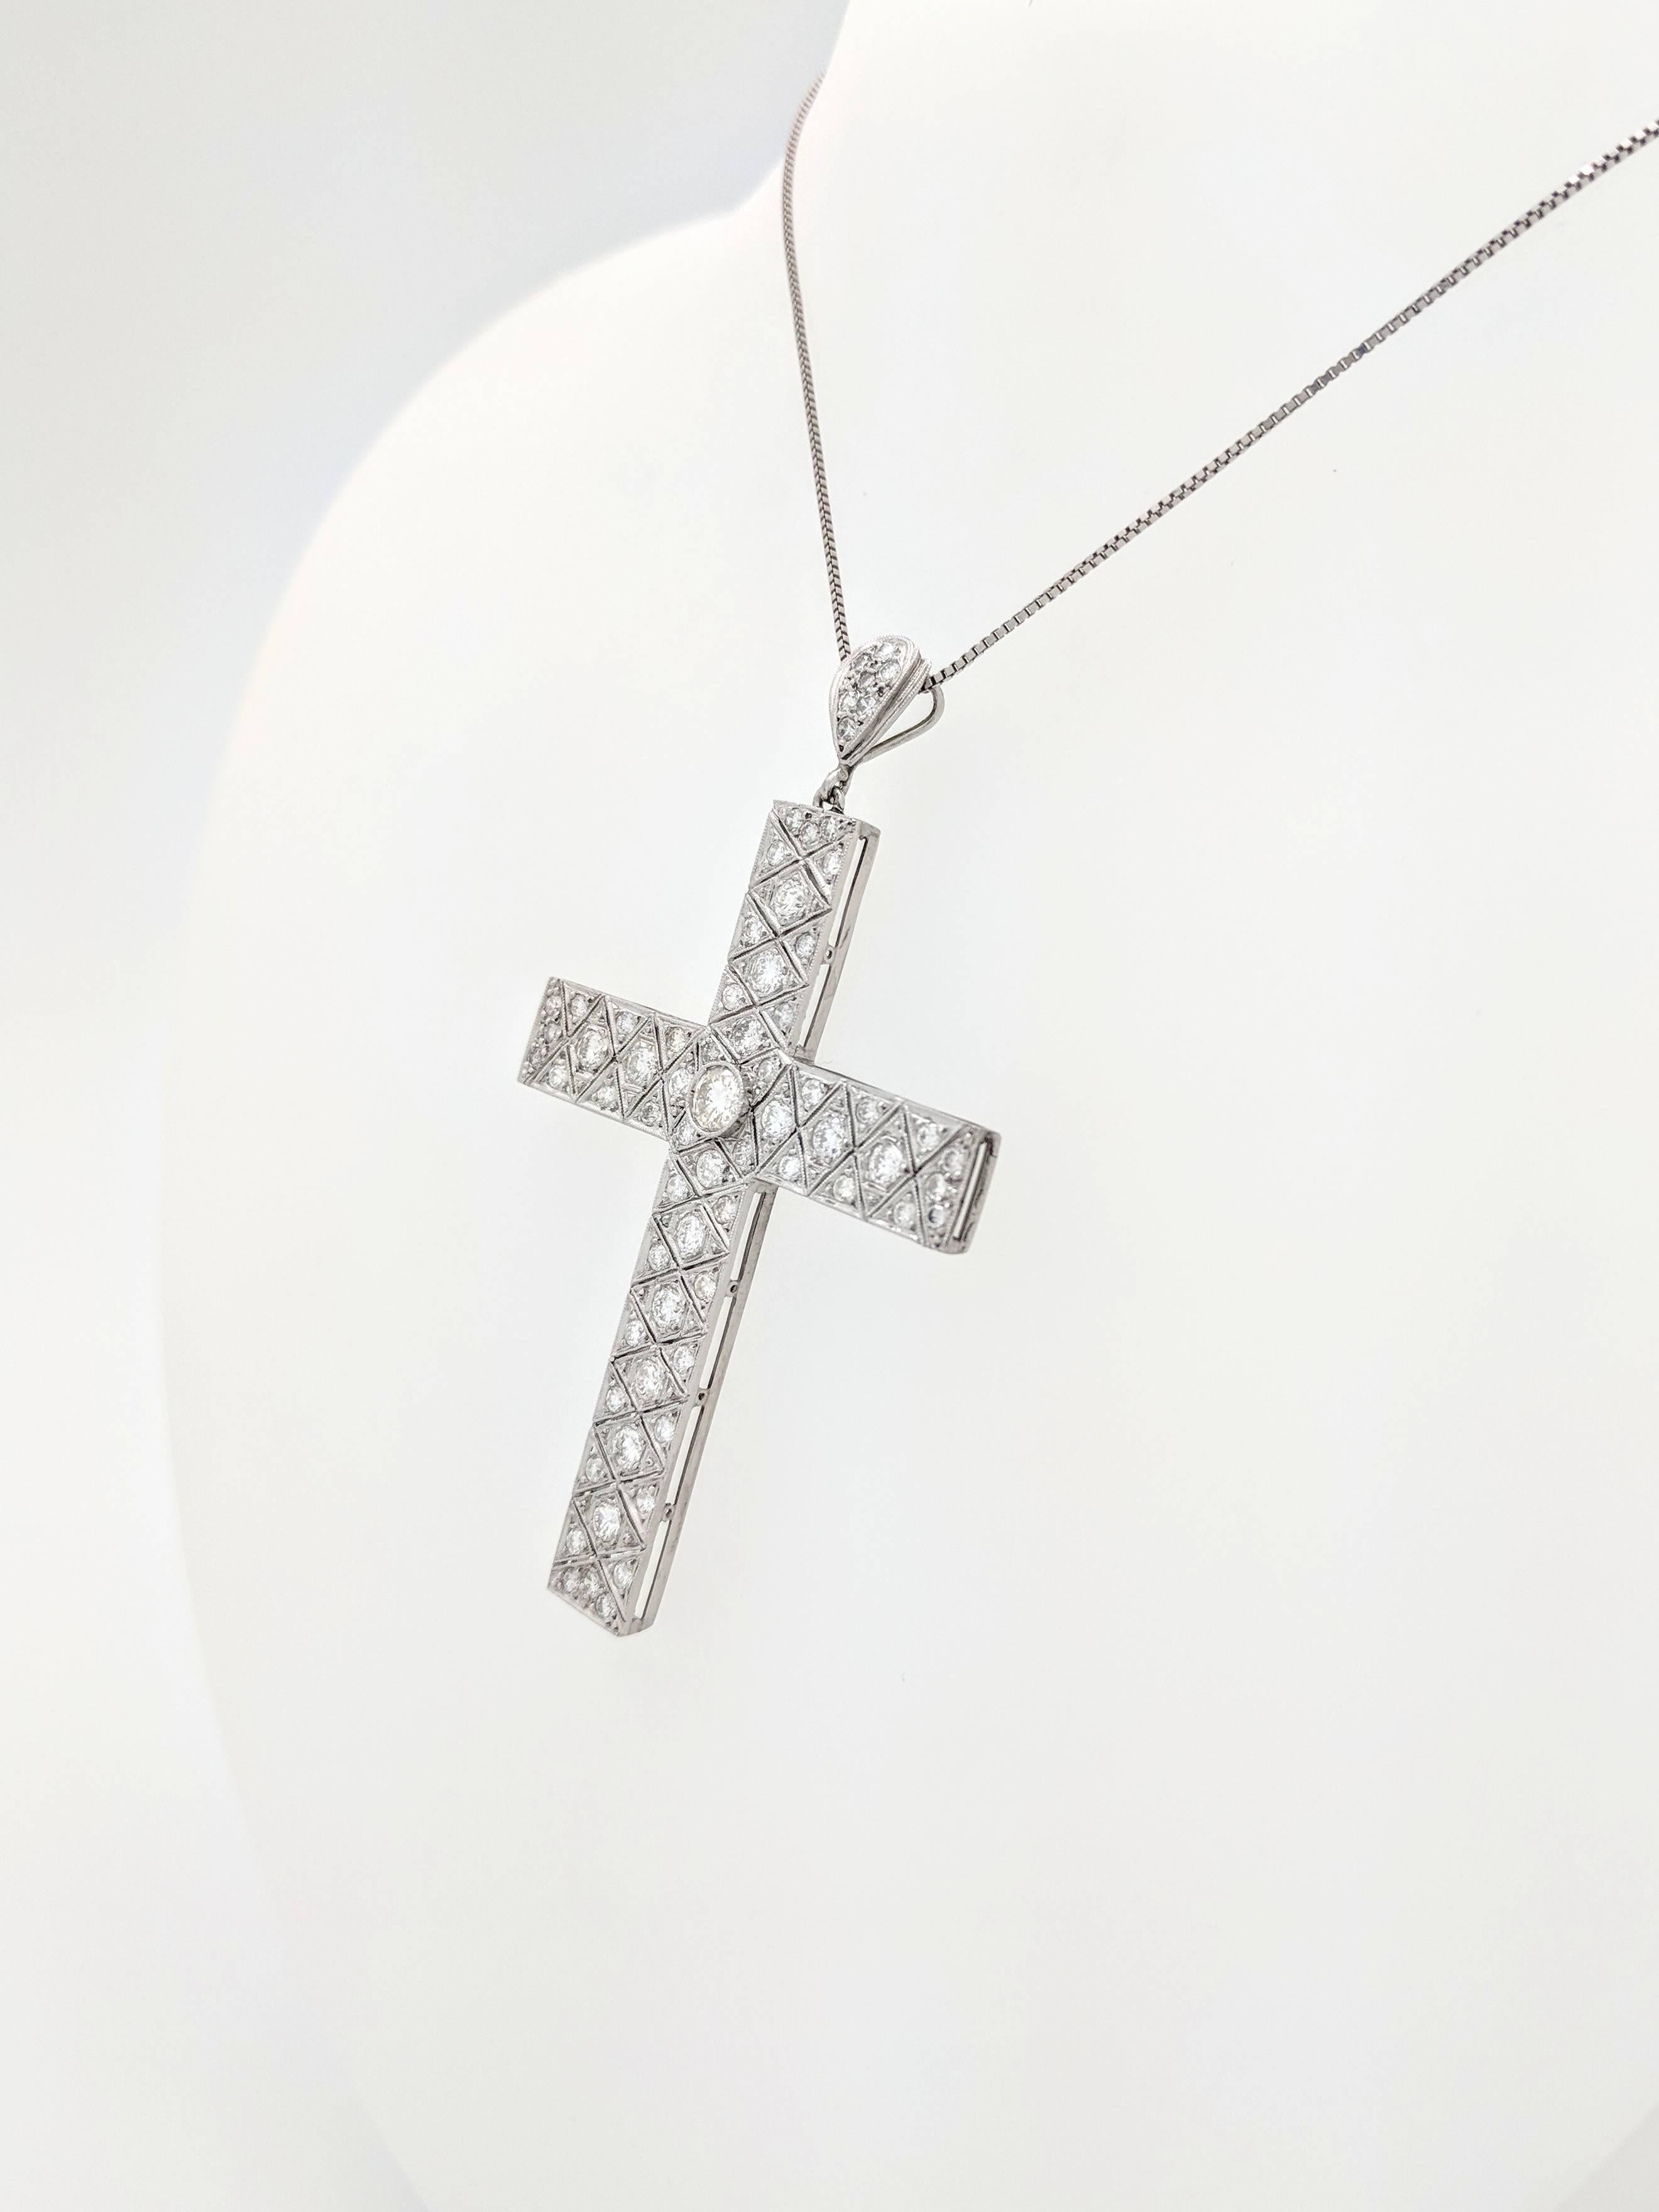 Art Deco Filigree Platinum Diamond Cross Pendant Necklace 3.03ctw In Excellent Condition For Sale In Gainesville, FL